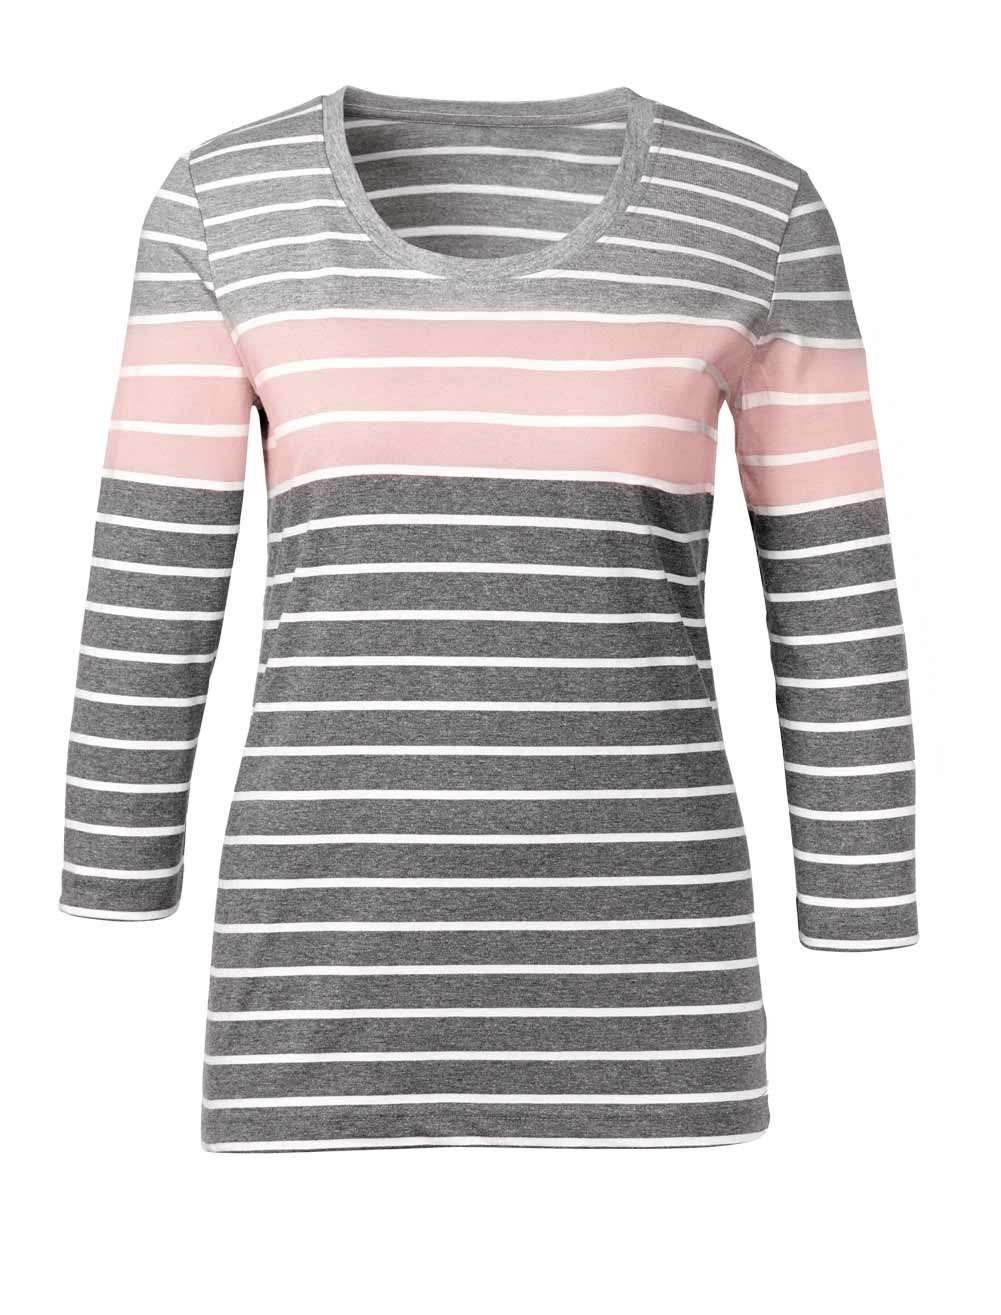 CRéATION grau-rosé creation Streifenshirt, PREMIUM Damen L L Rundhalsshirt